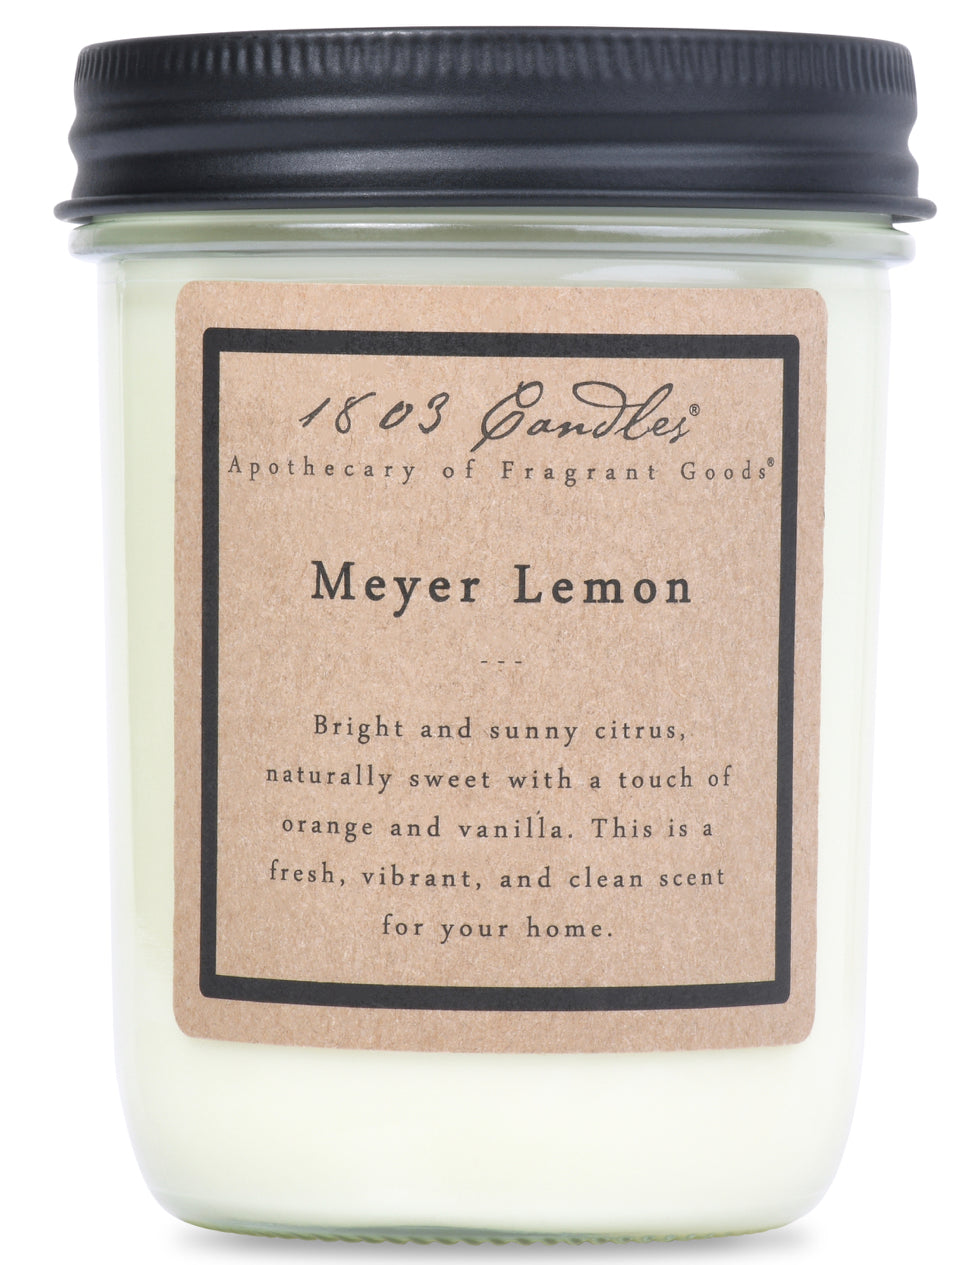 Meyer Lemon 1803 Candle